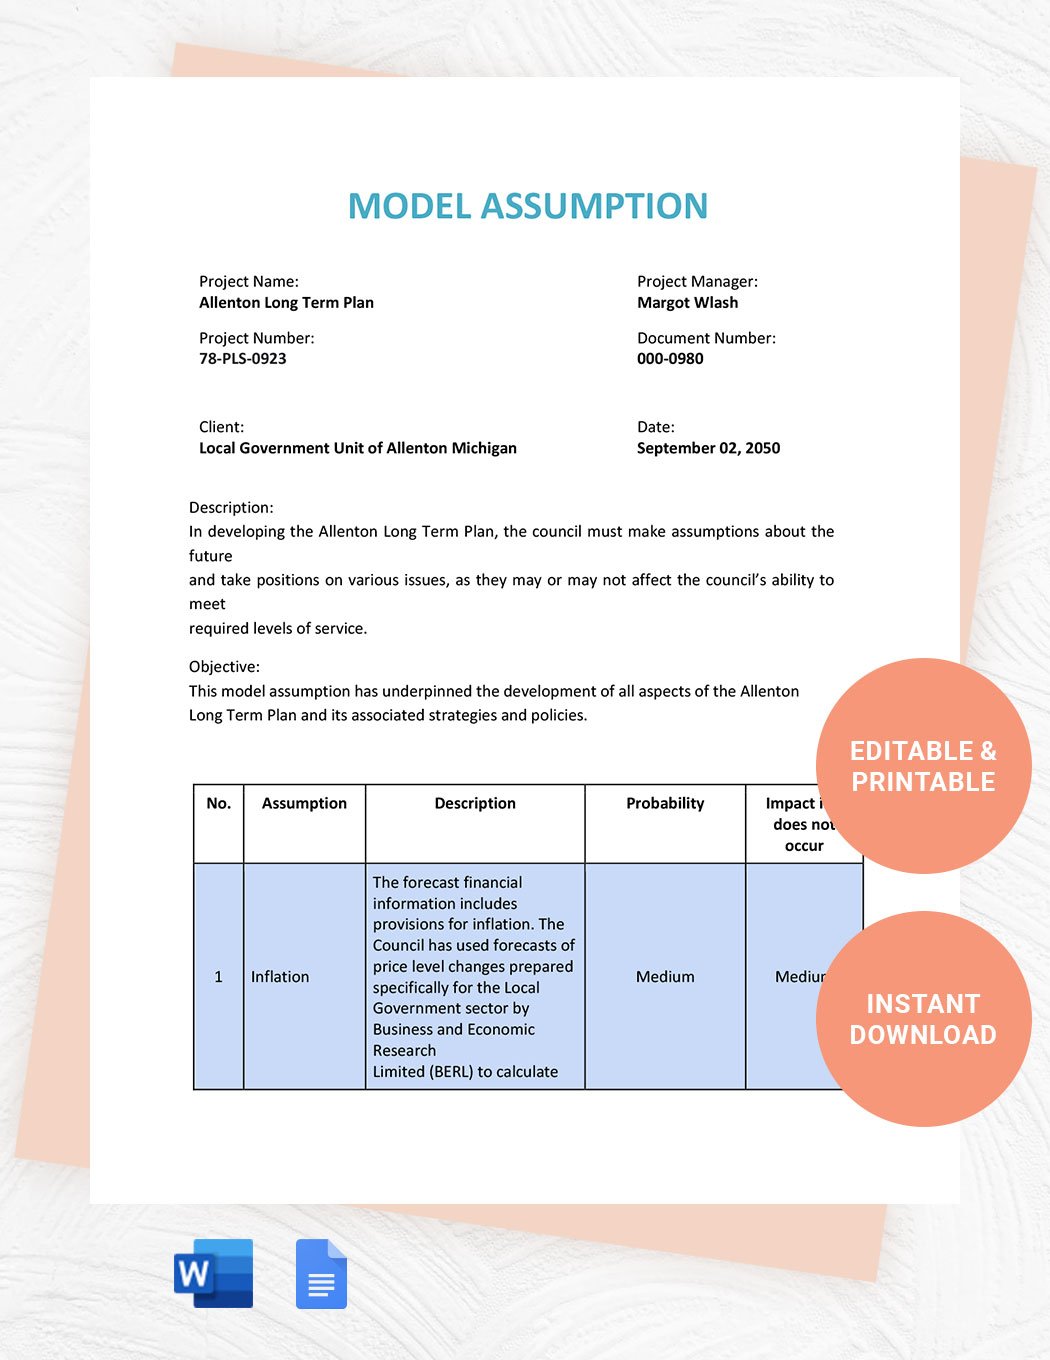 Model Assumption Template in Word, Google Docs